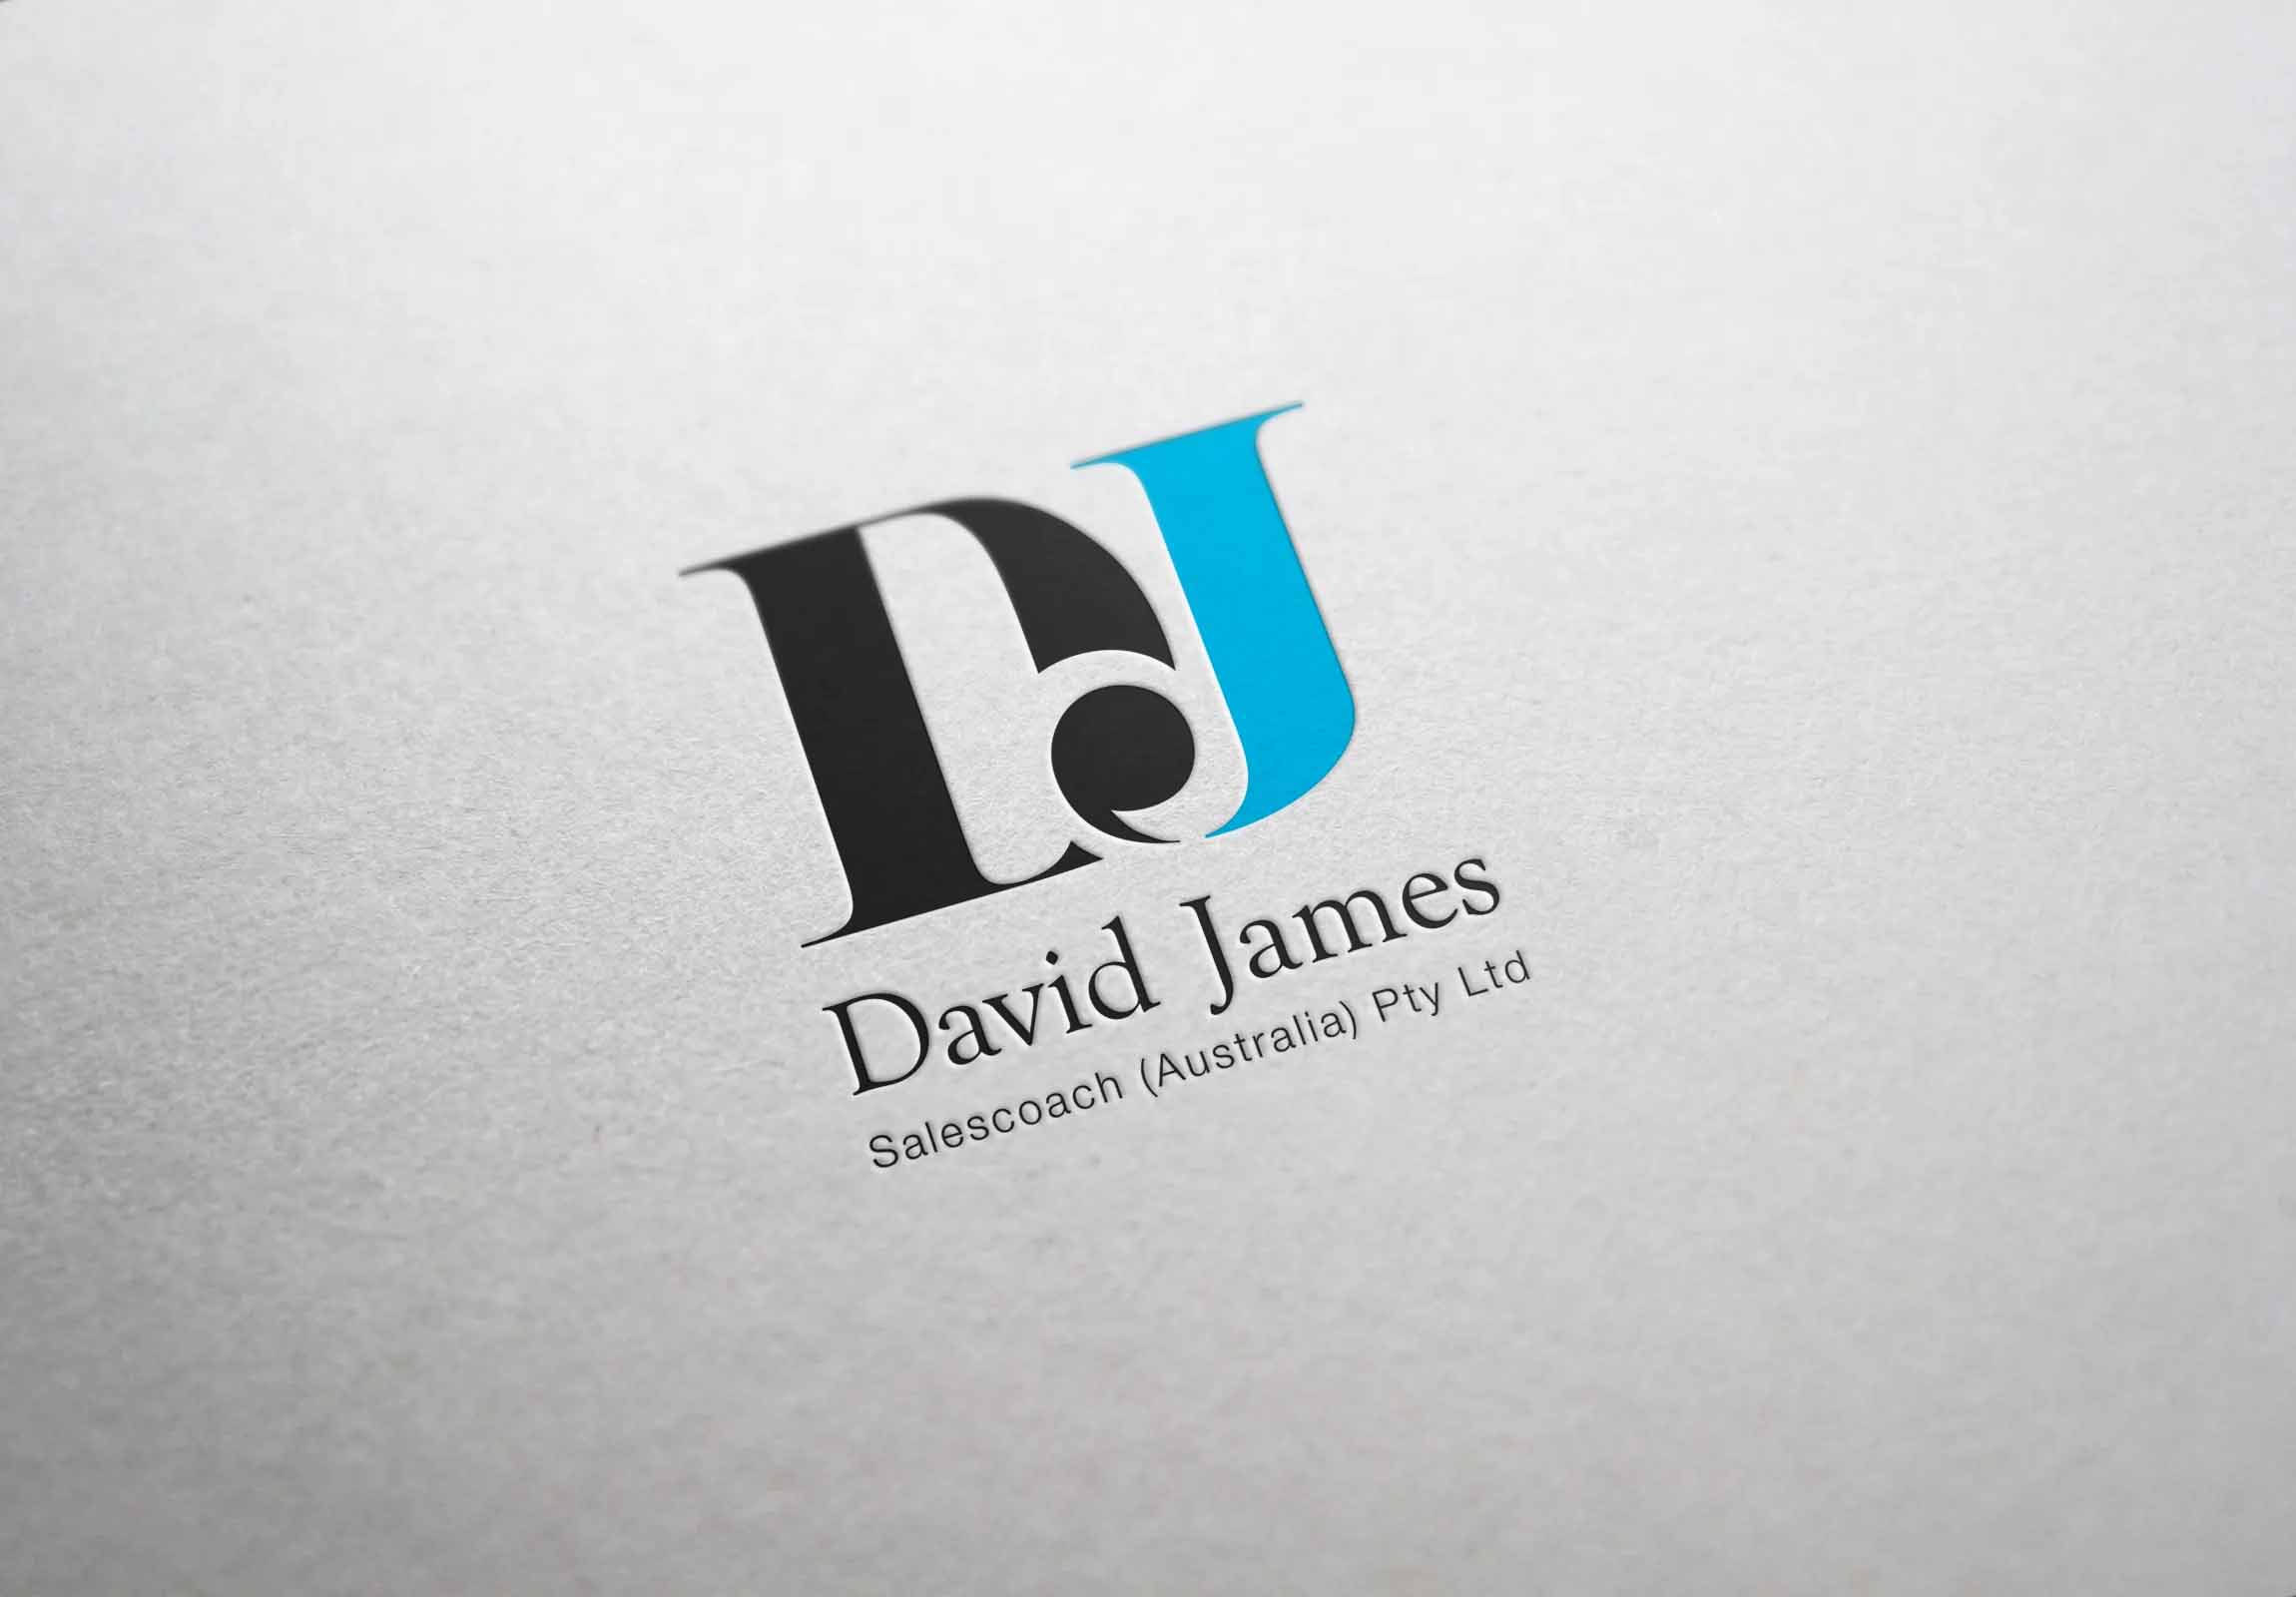 DavidJames – BEVIN CREATIVE